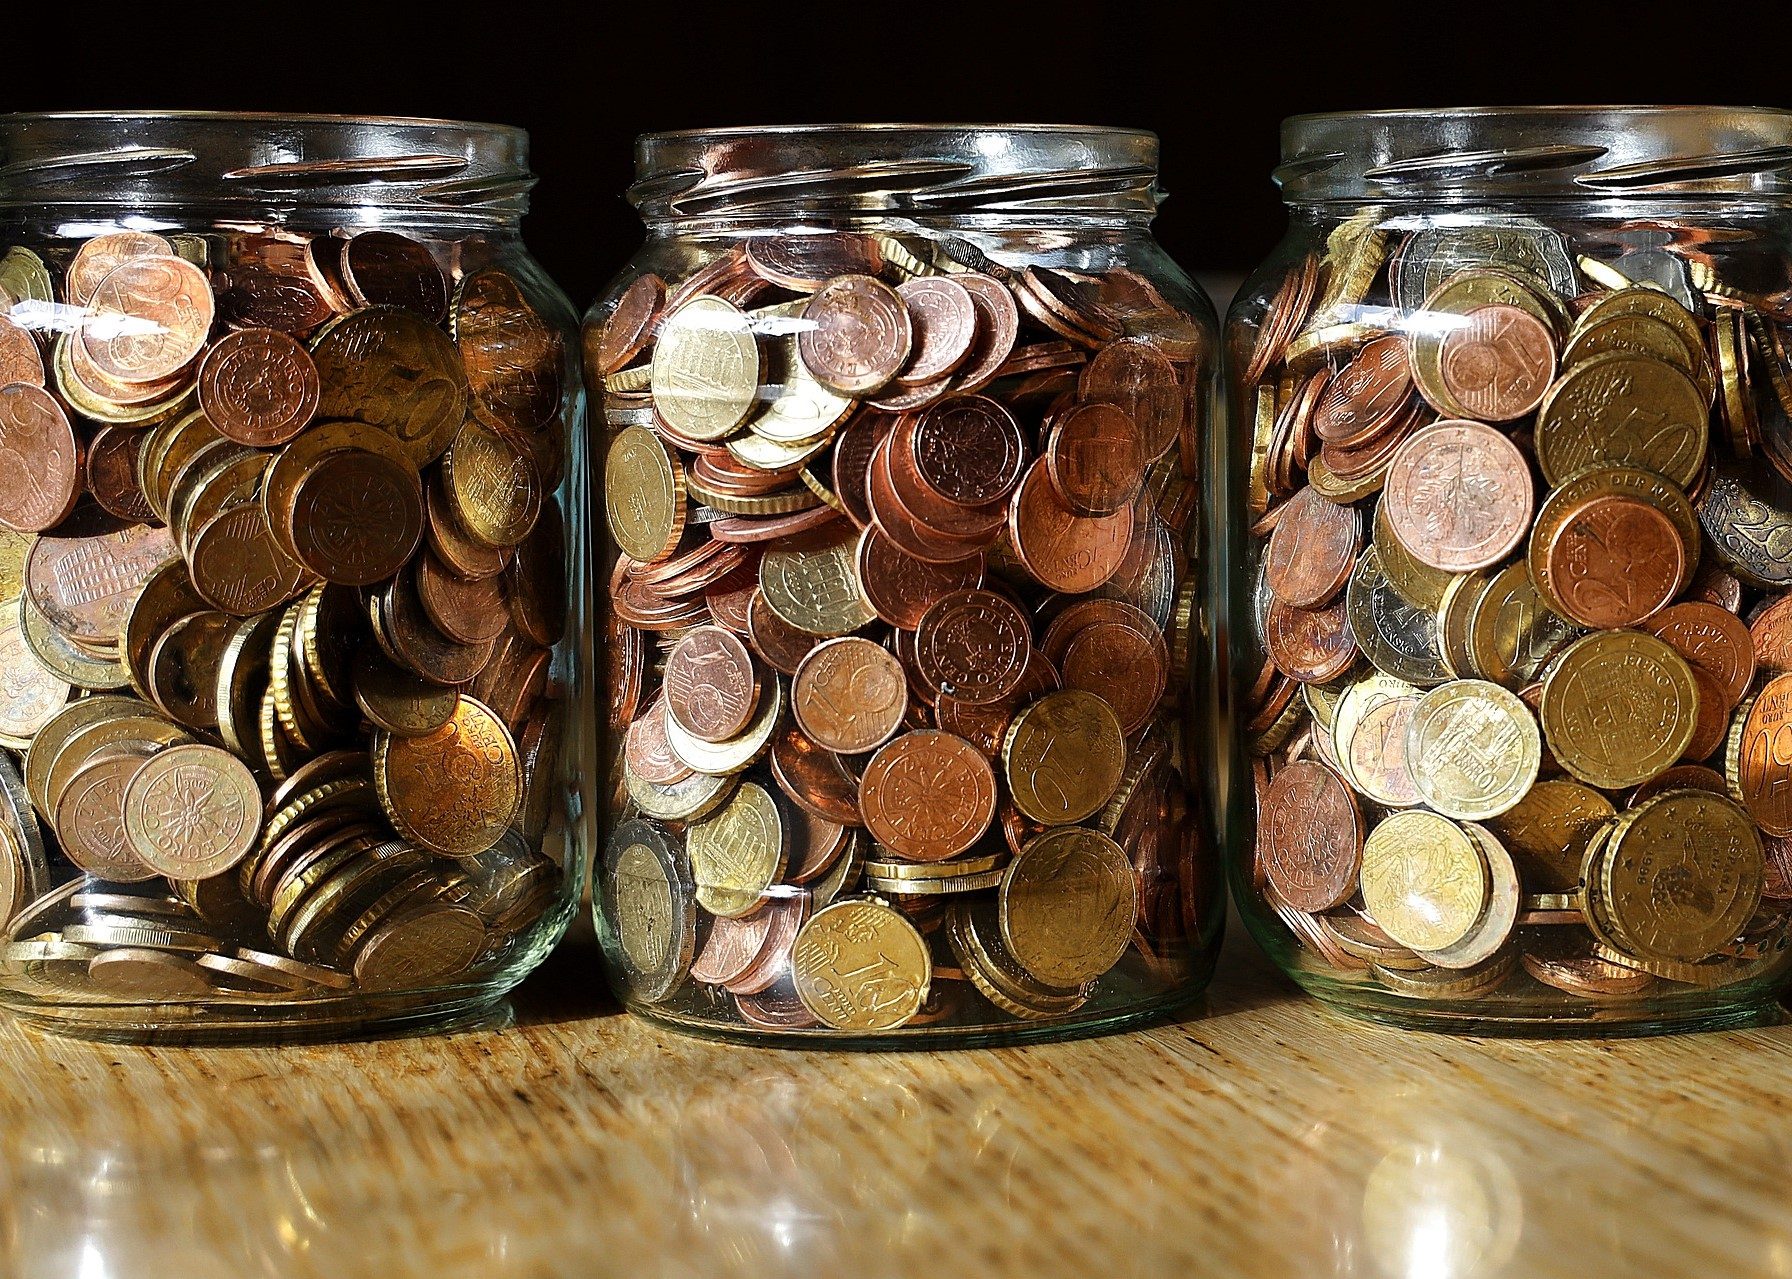 Geld in potjes - Foto: Franz W. (Pixabay)